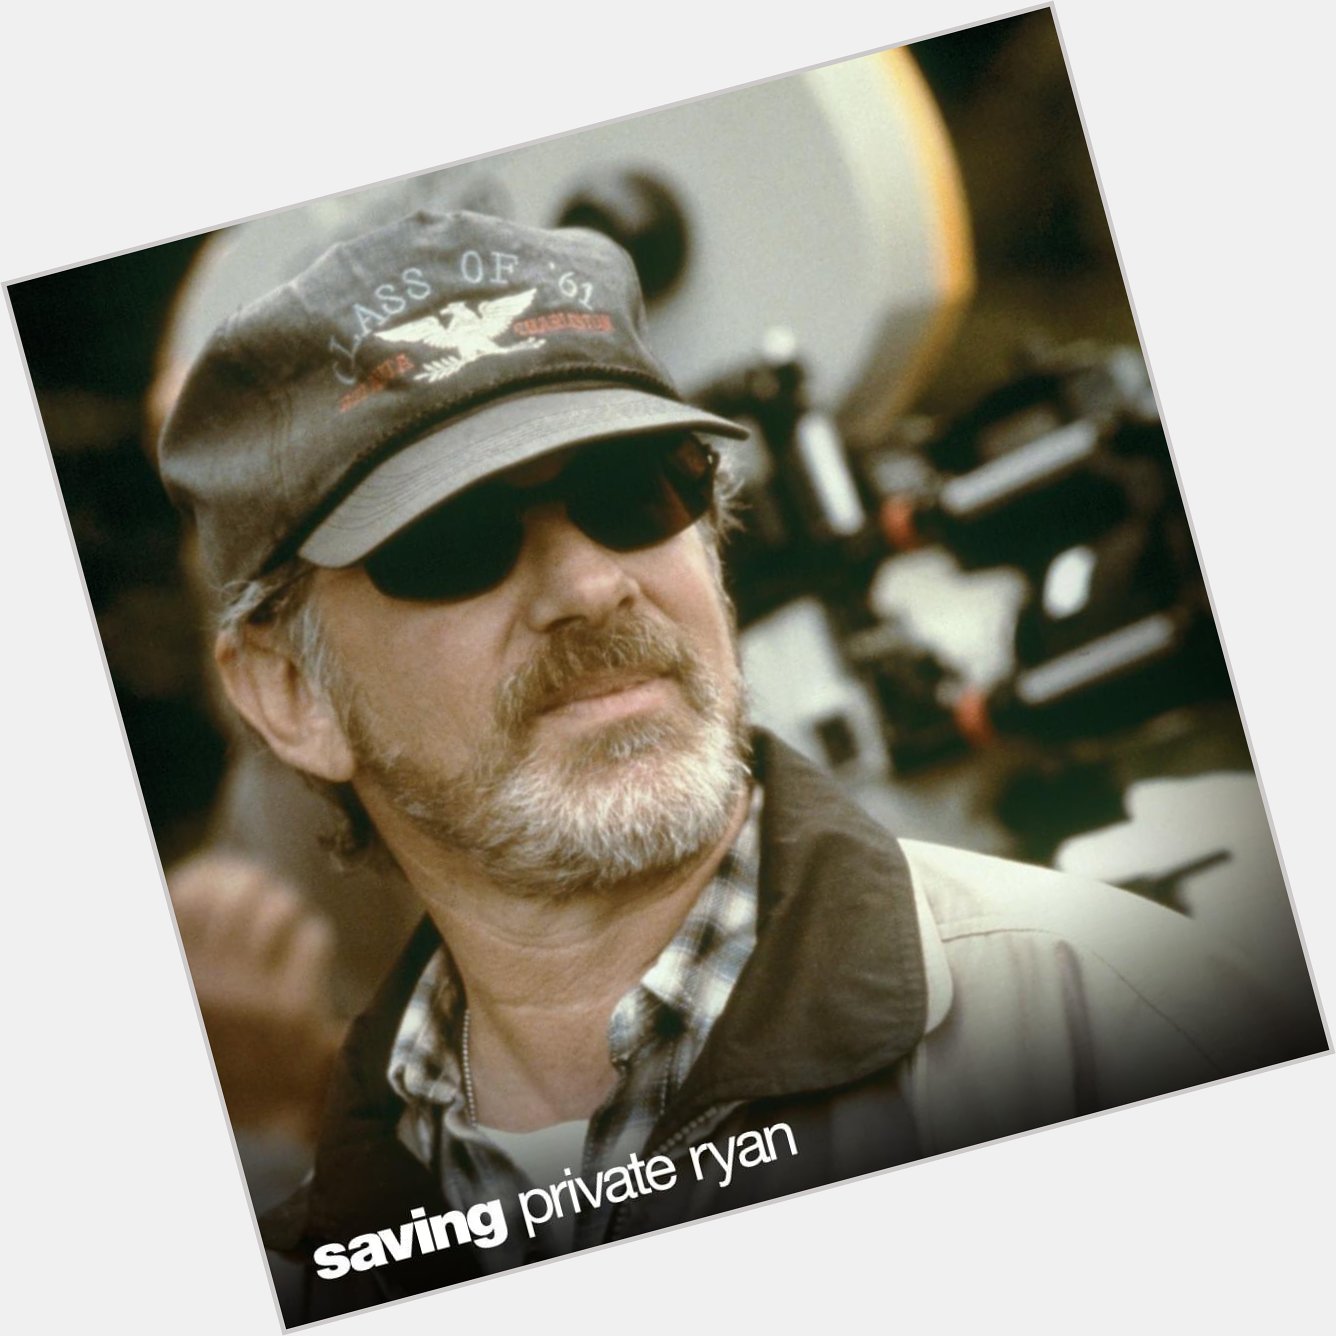 Happy Birthday to the great storyteller, Director Steven Spielberg. 